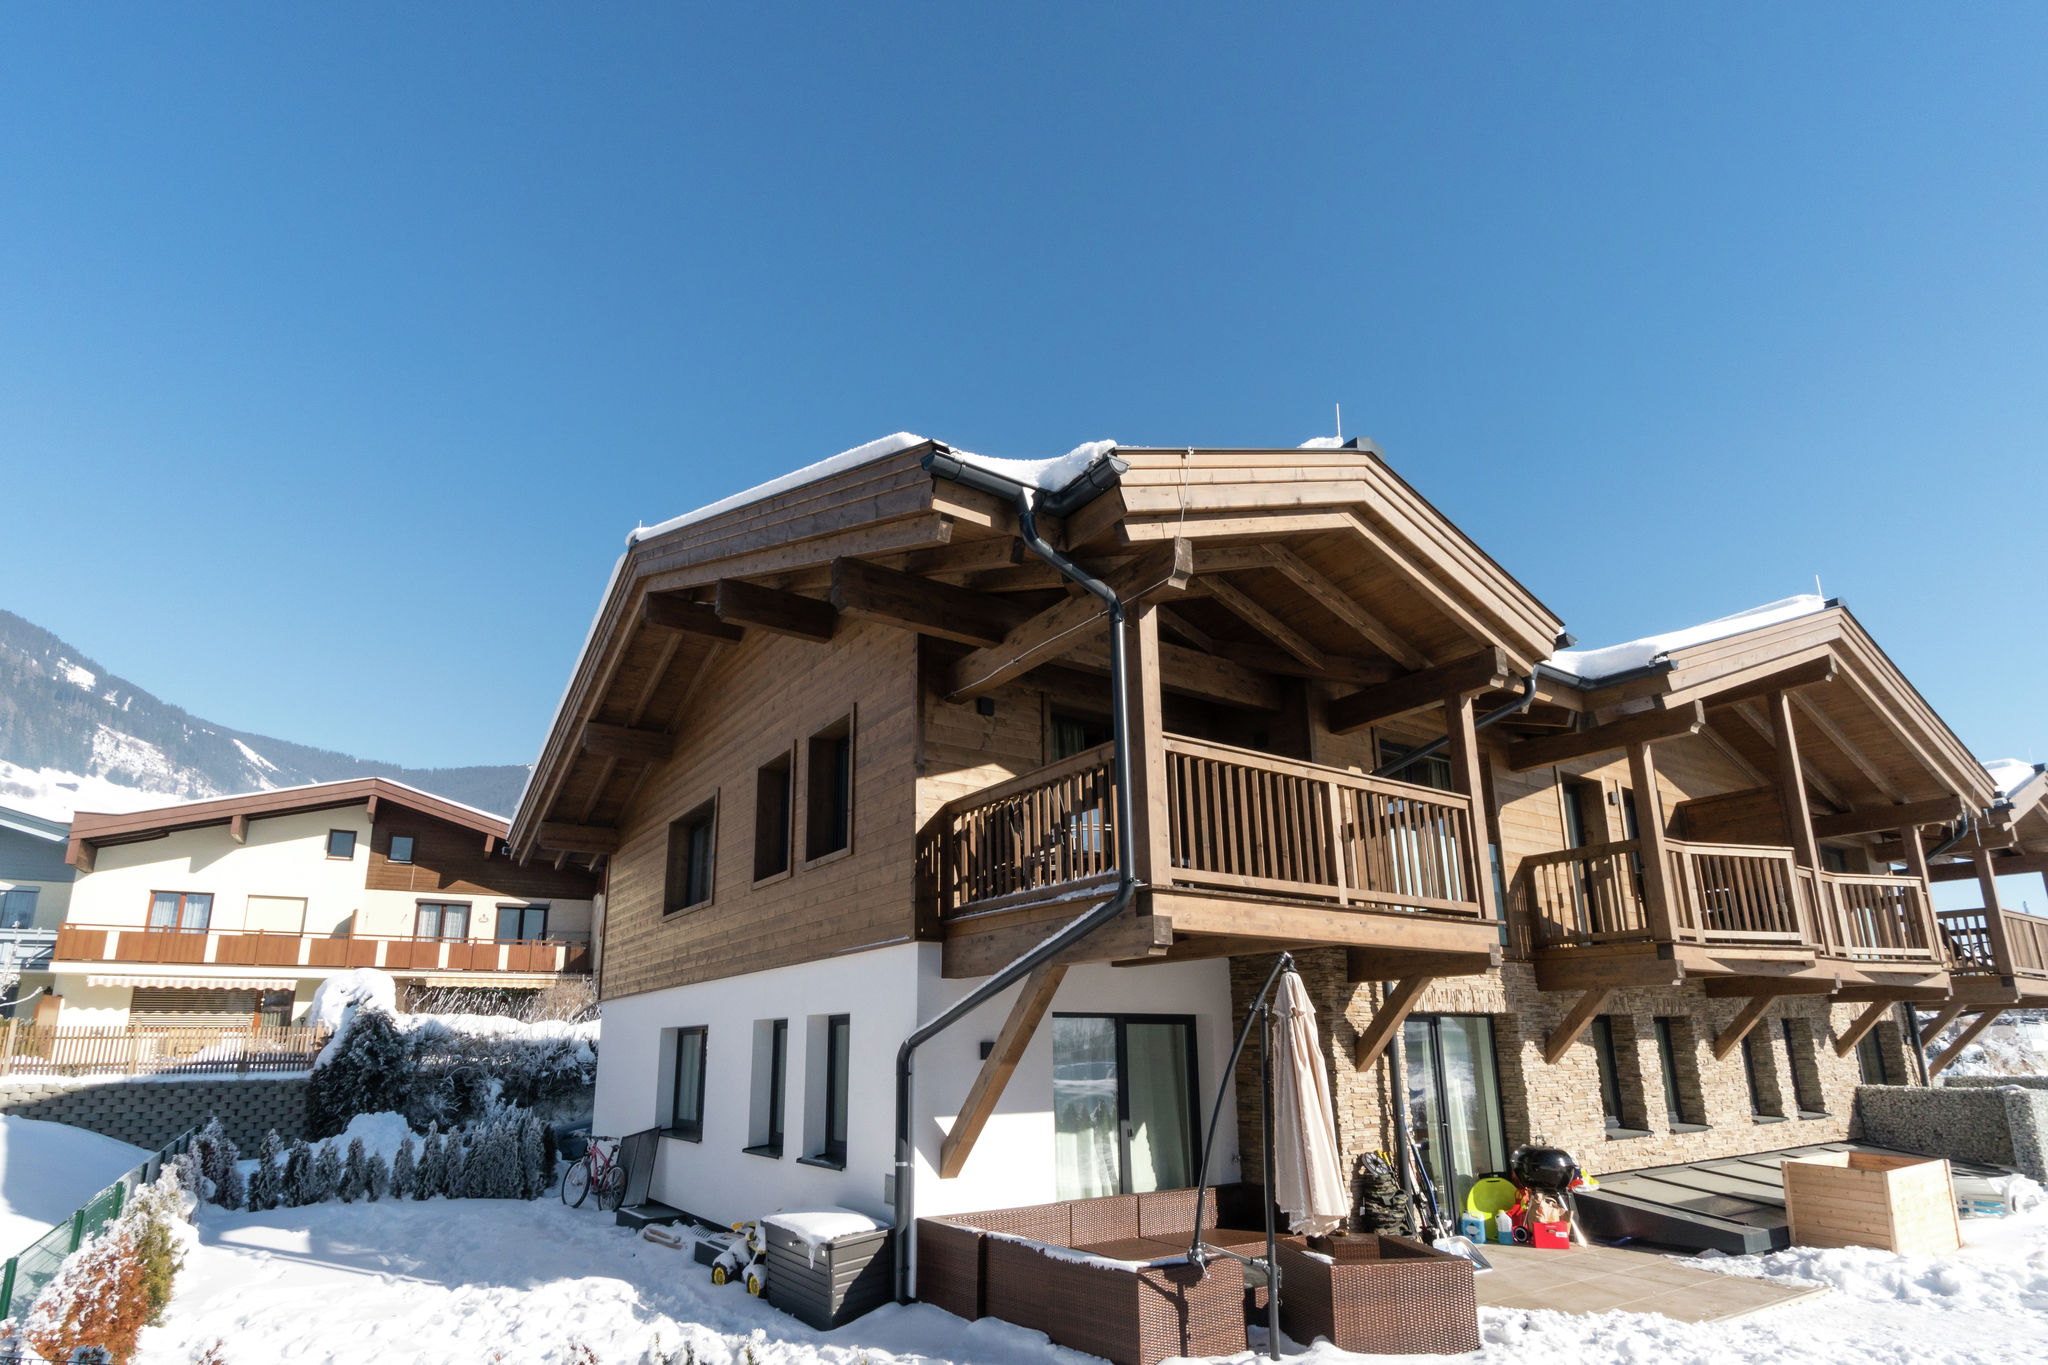 Apartment in Piesendorf in ski area with sauna